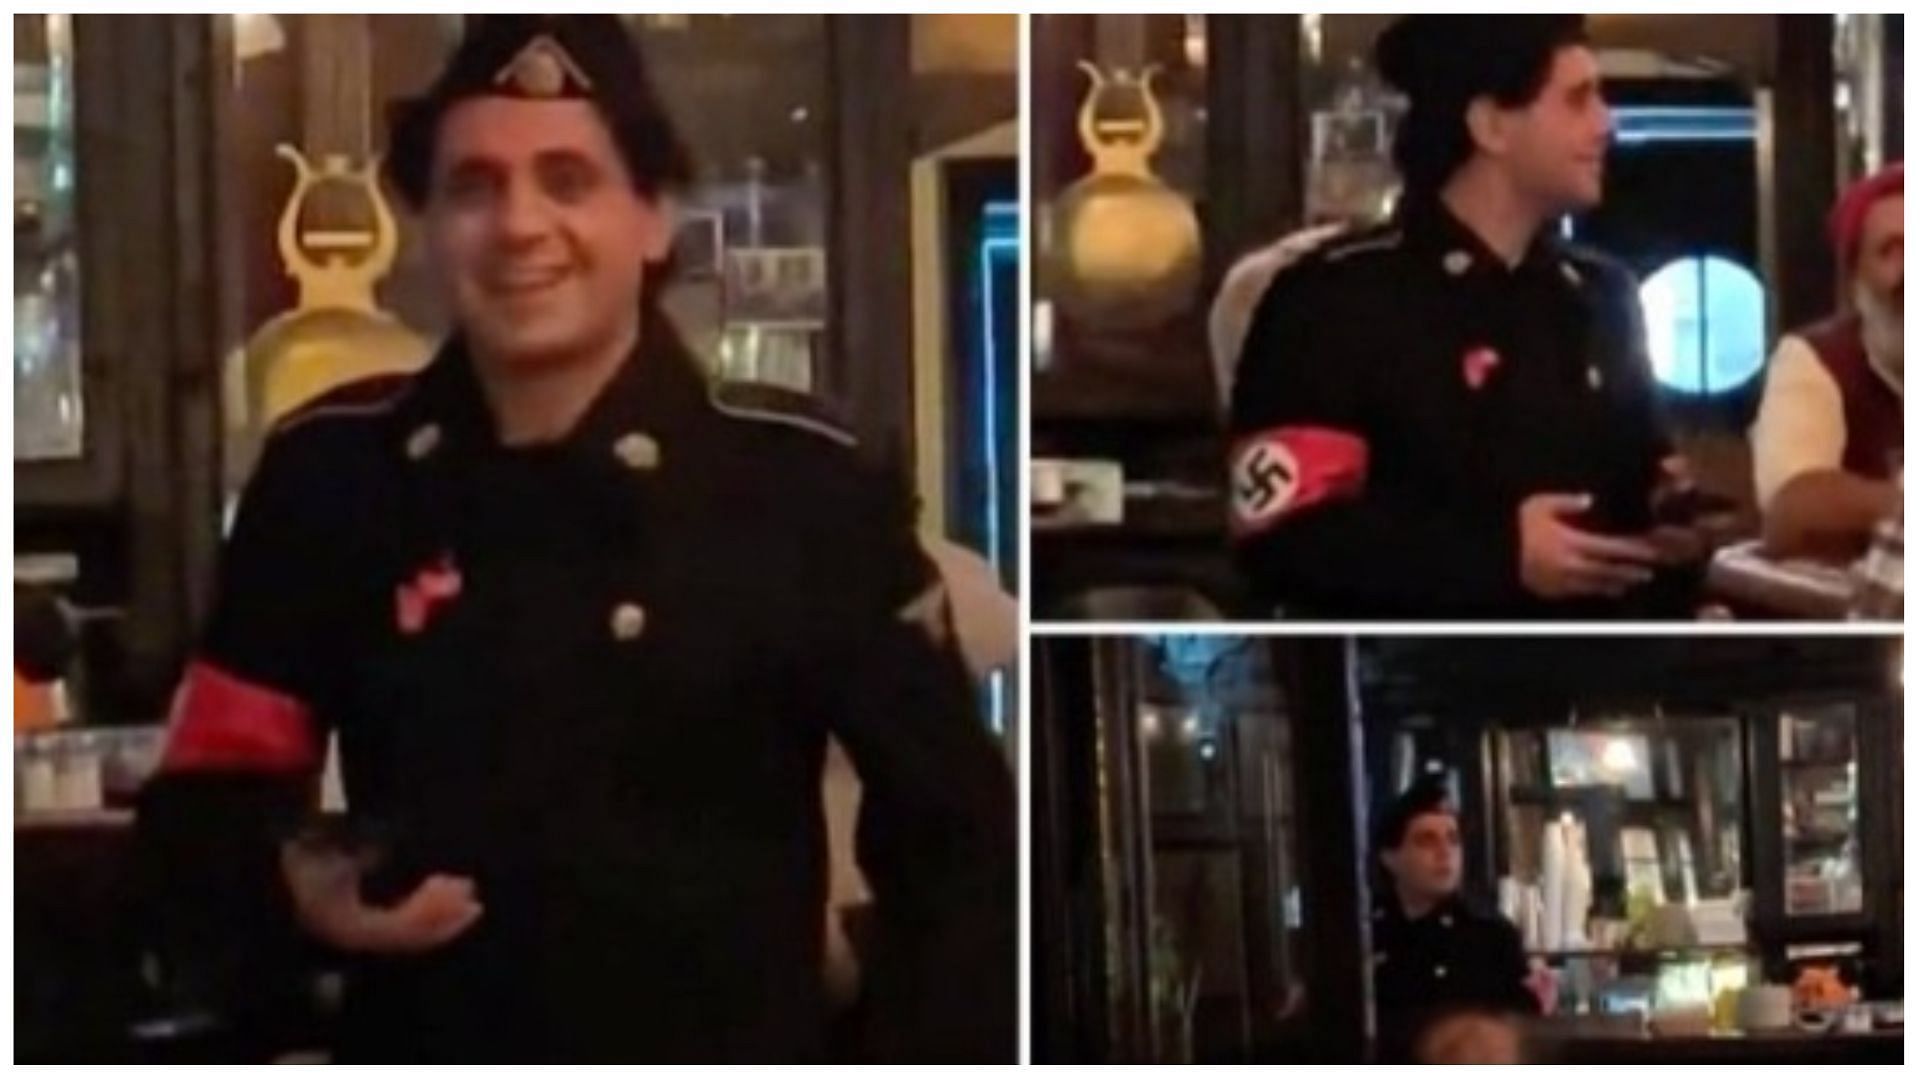 Viral video shows man dressed in Nazi uniform ordered out of Manhattan bar (Image via Twitter/Owen333)